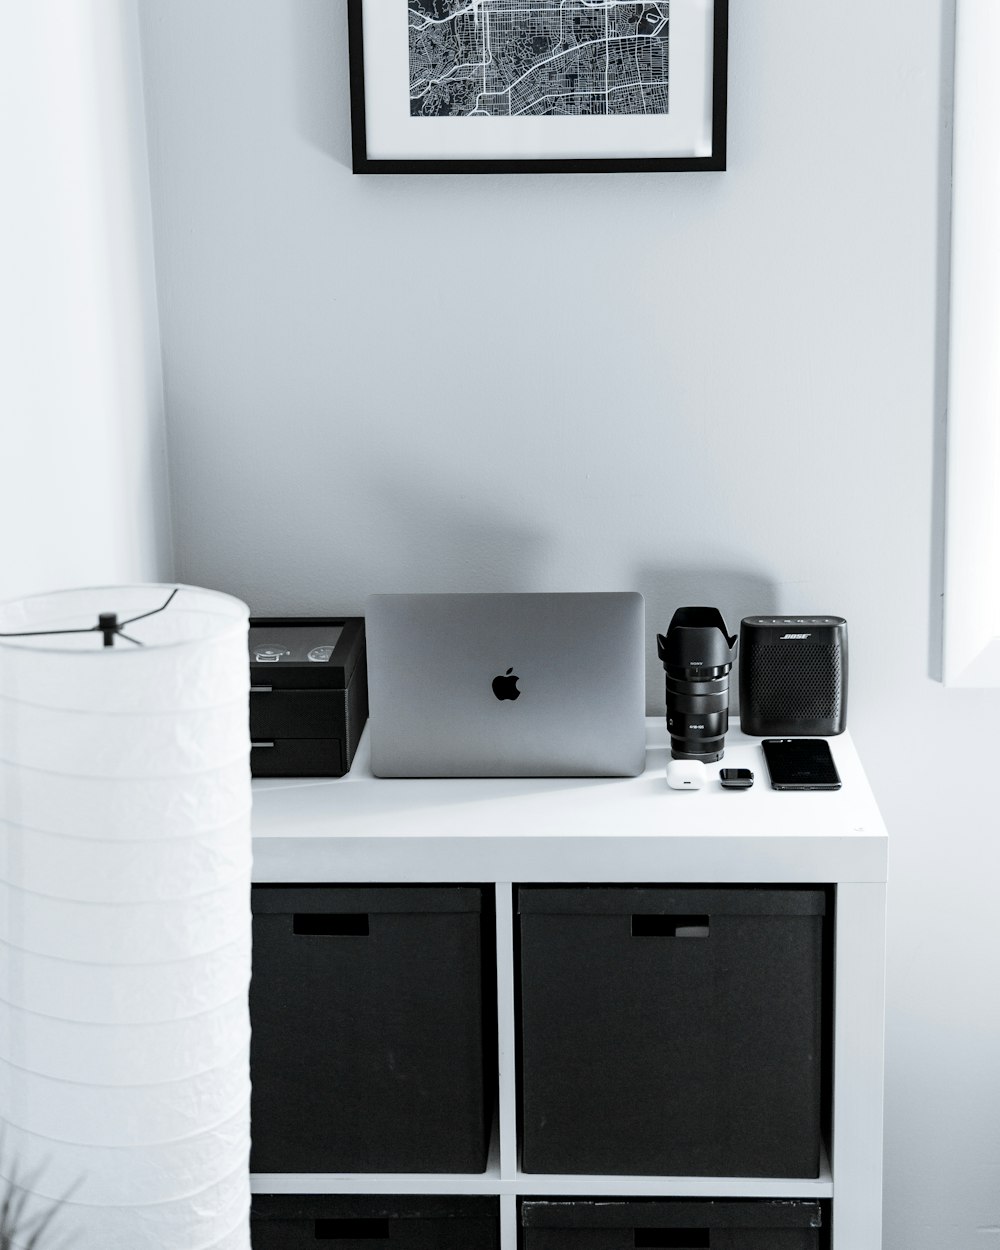 silver MacBook beside black camera lens and speaker on dresser